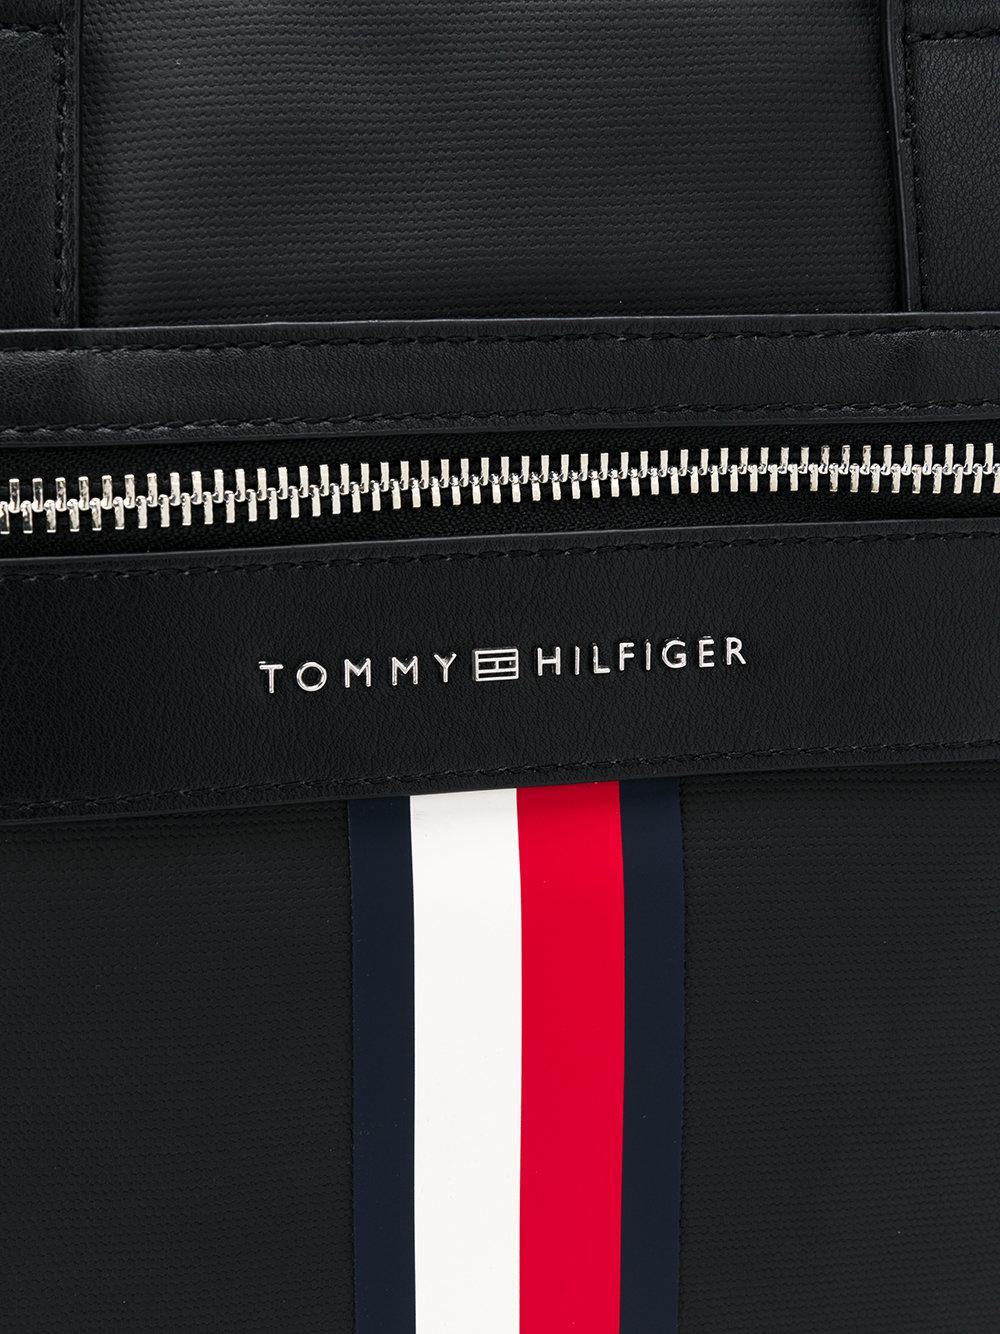 Tommy Hilfiger Business Casual Laptop Bag in Black for Men - Lyst